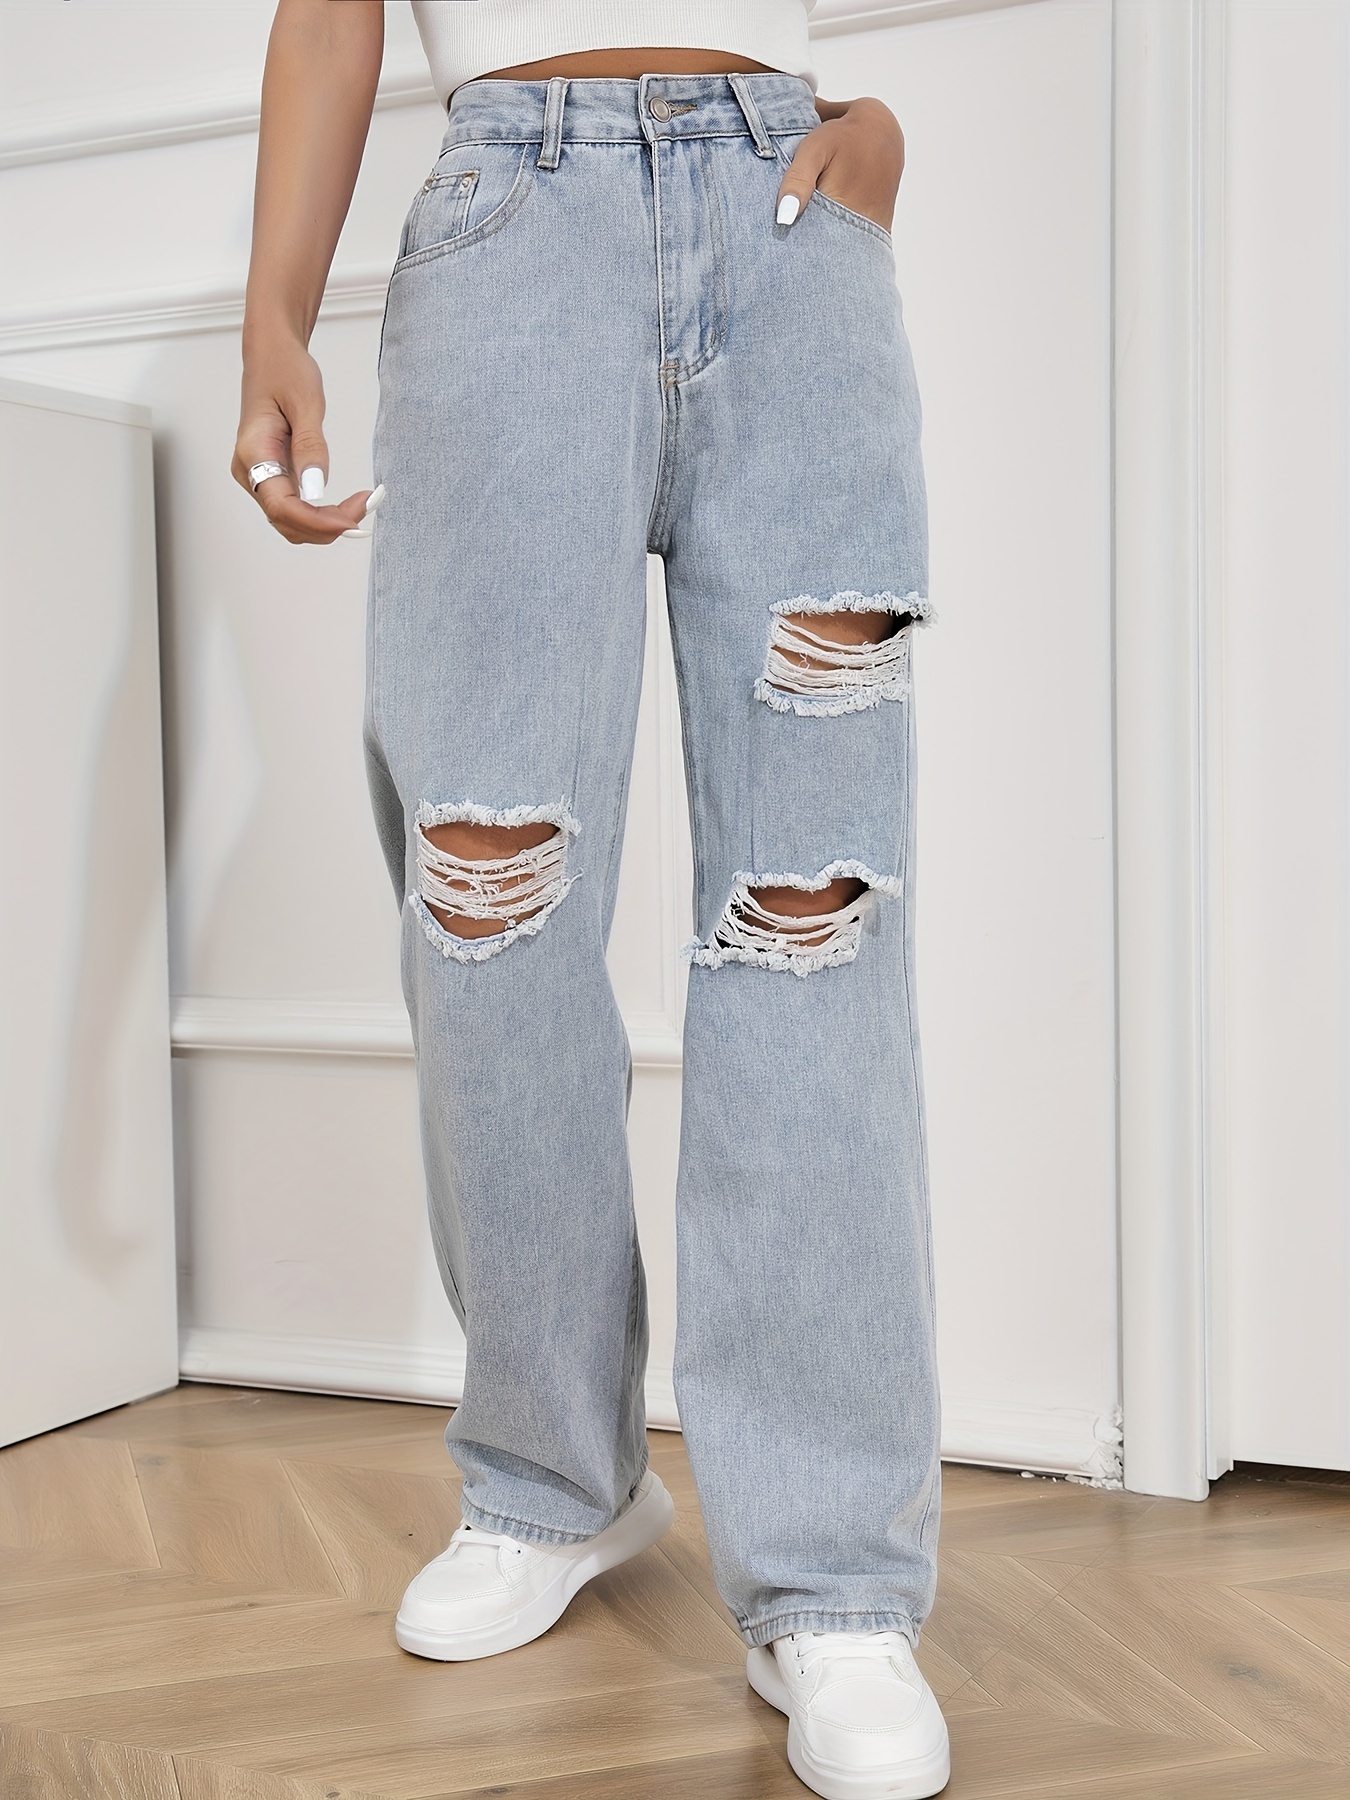 Shein Button Detail Baggy Jeans Light Wash Size XL